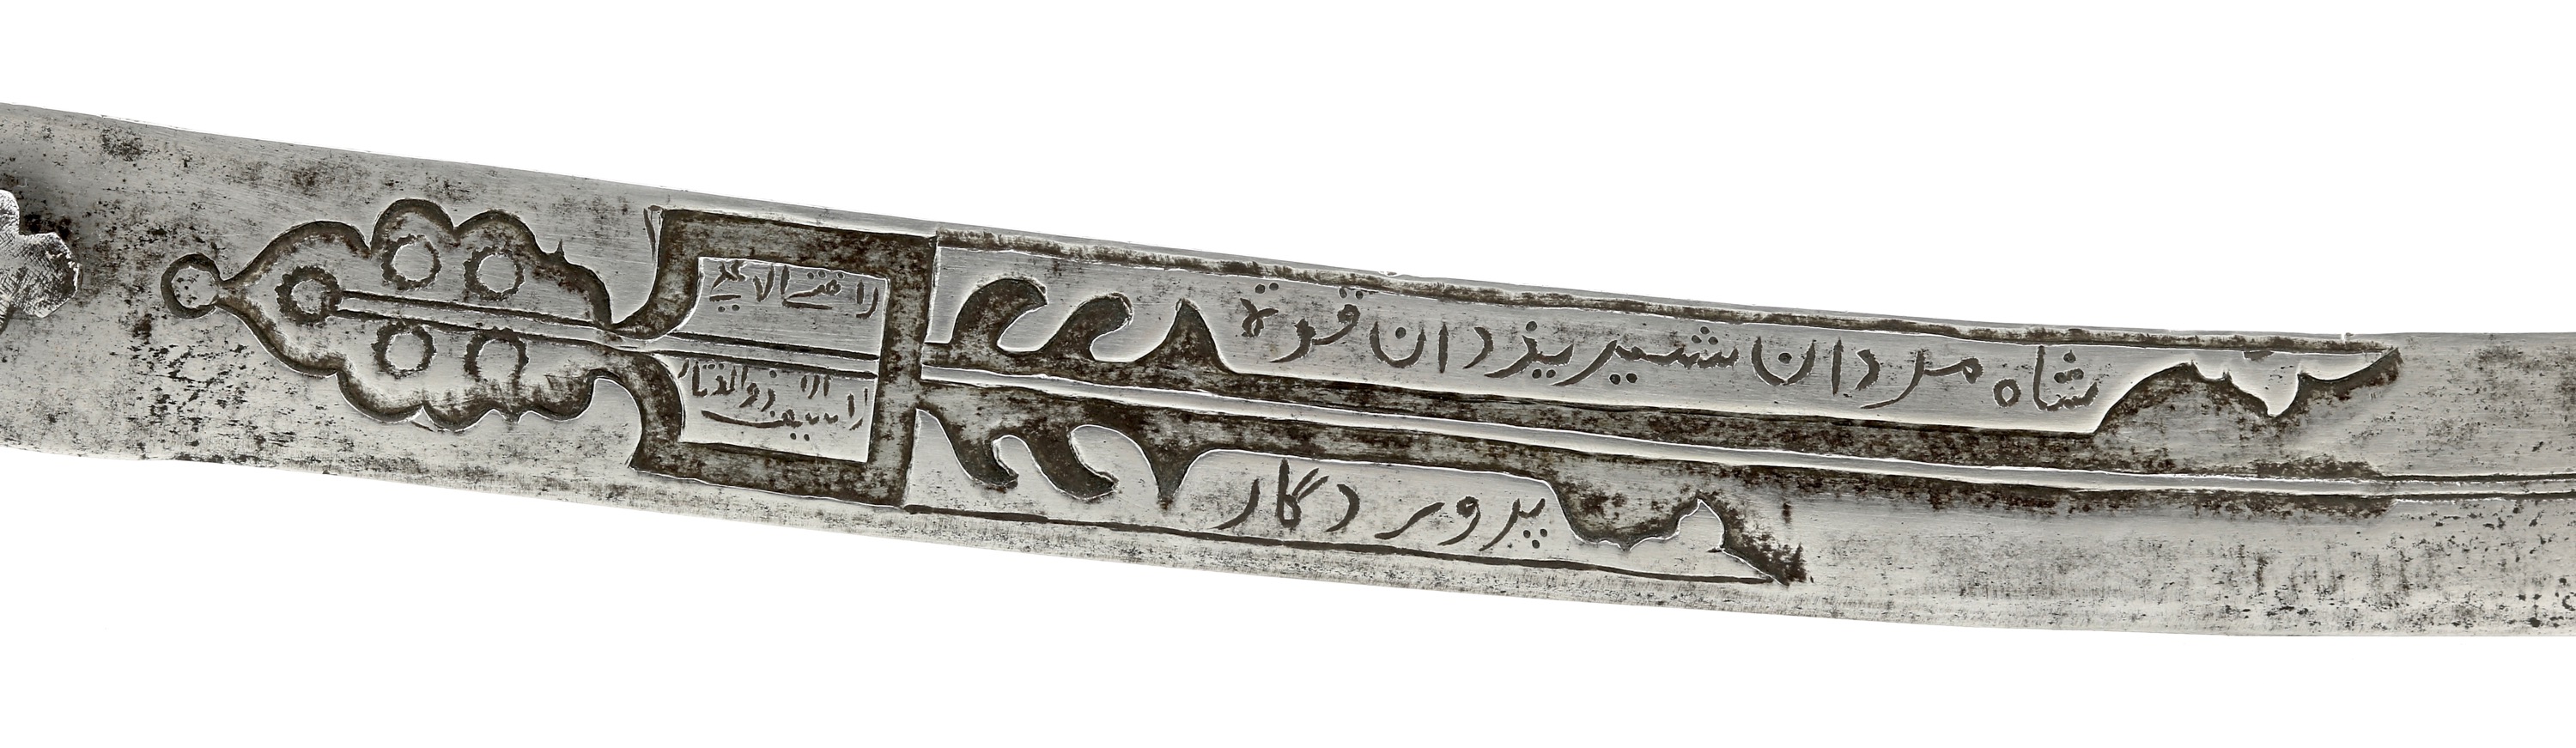 Mamluk style blade decor on talwar